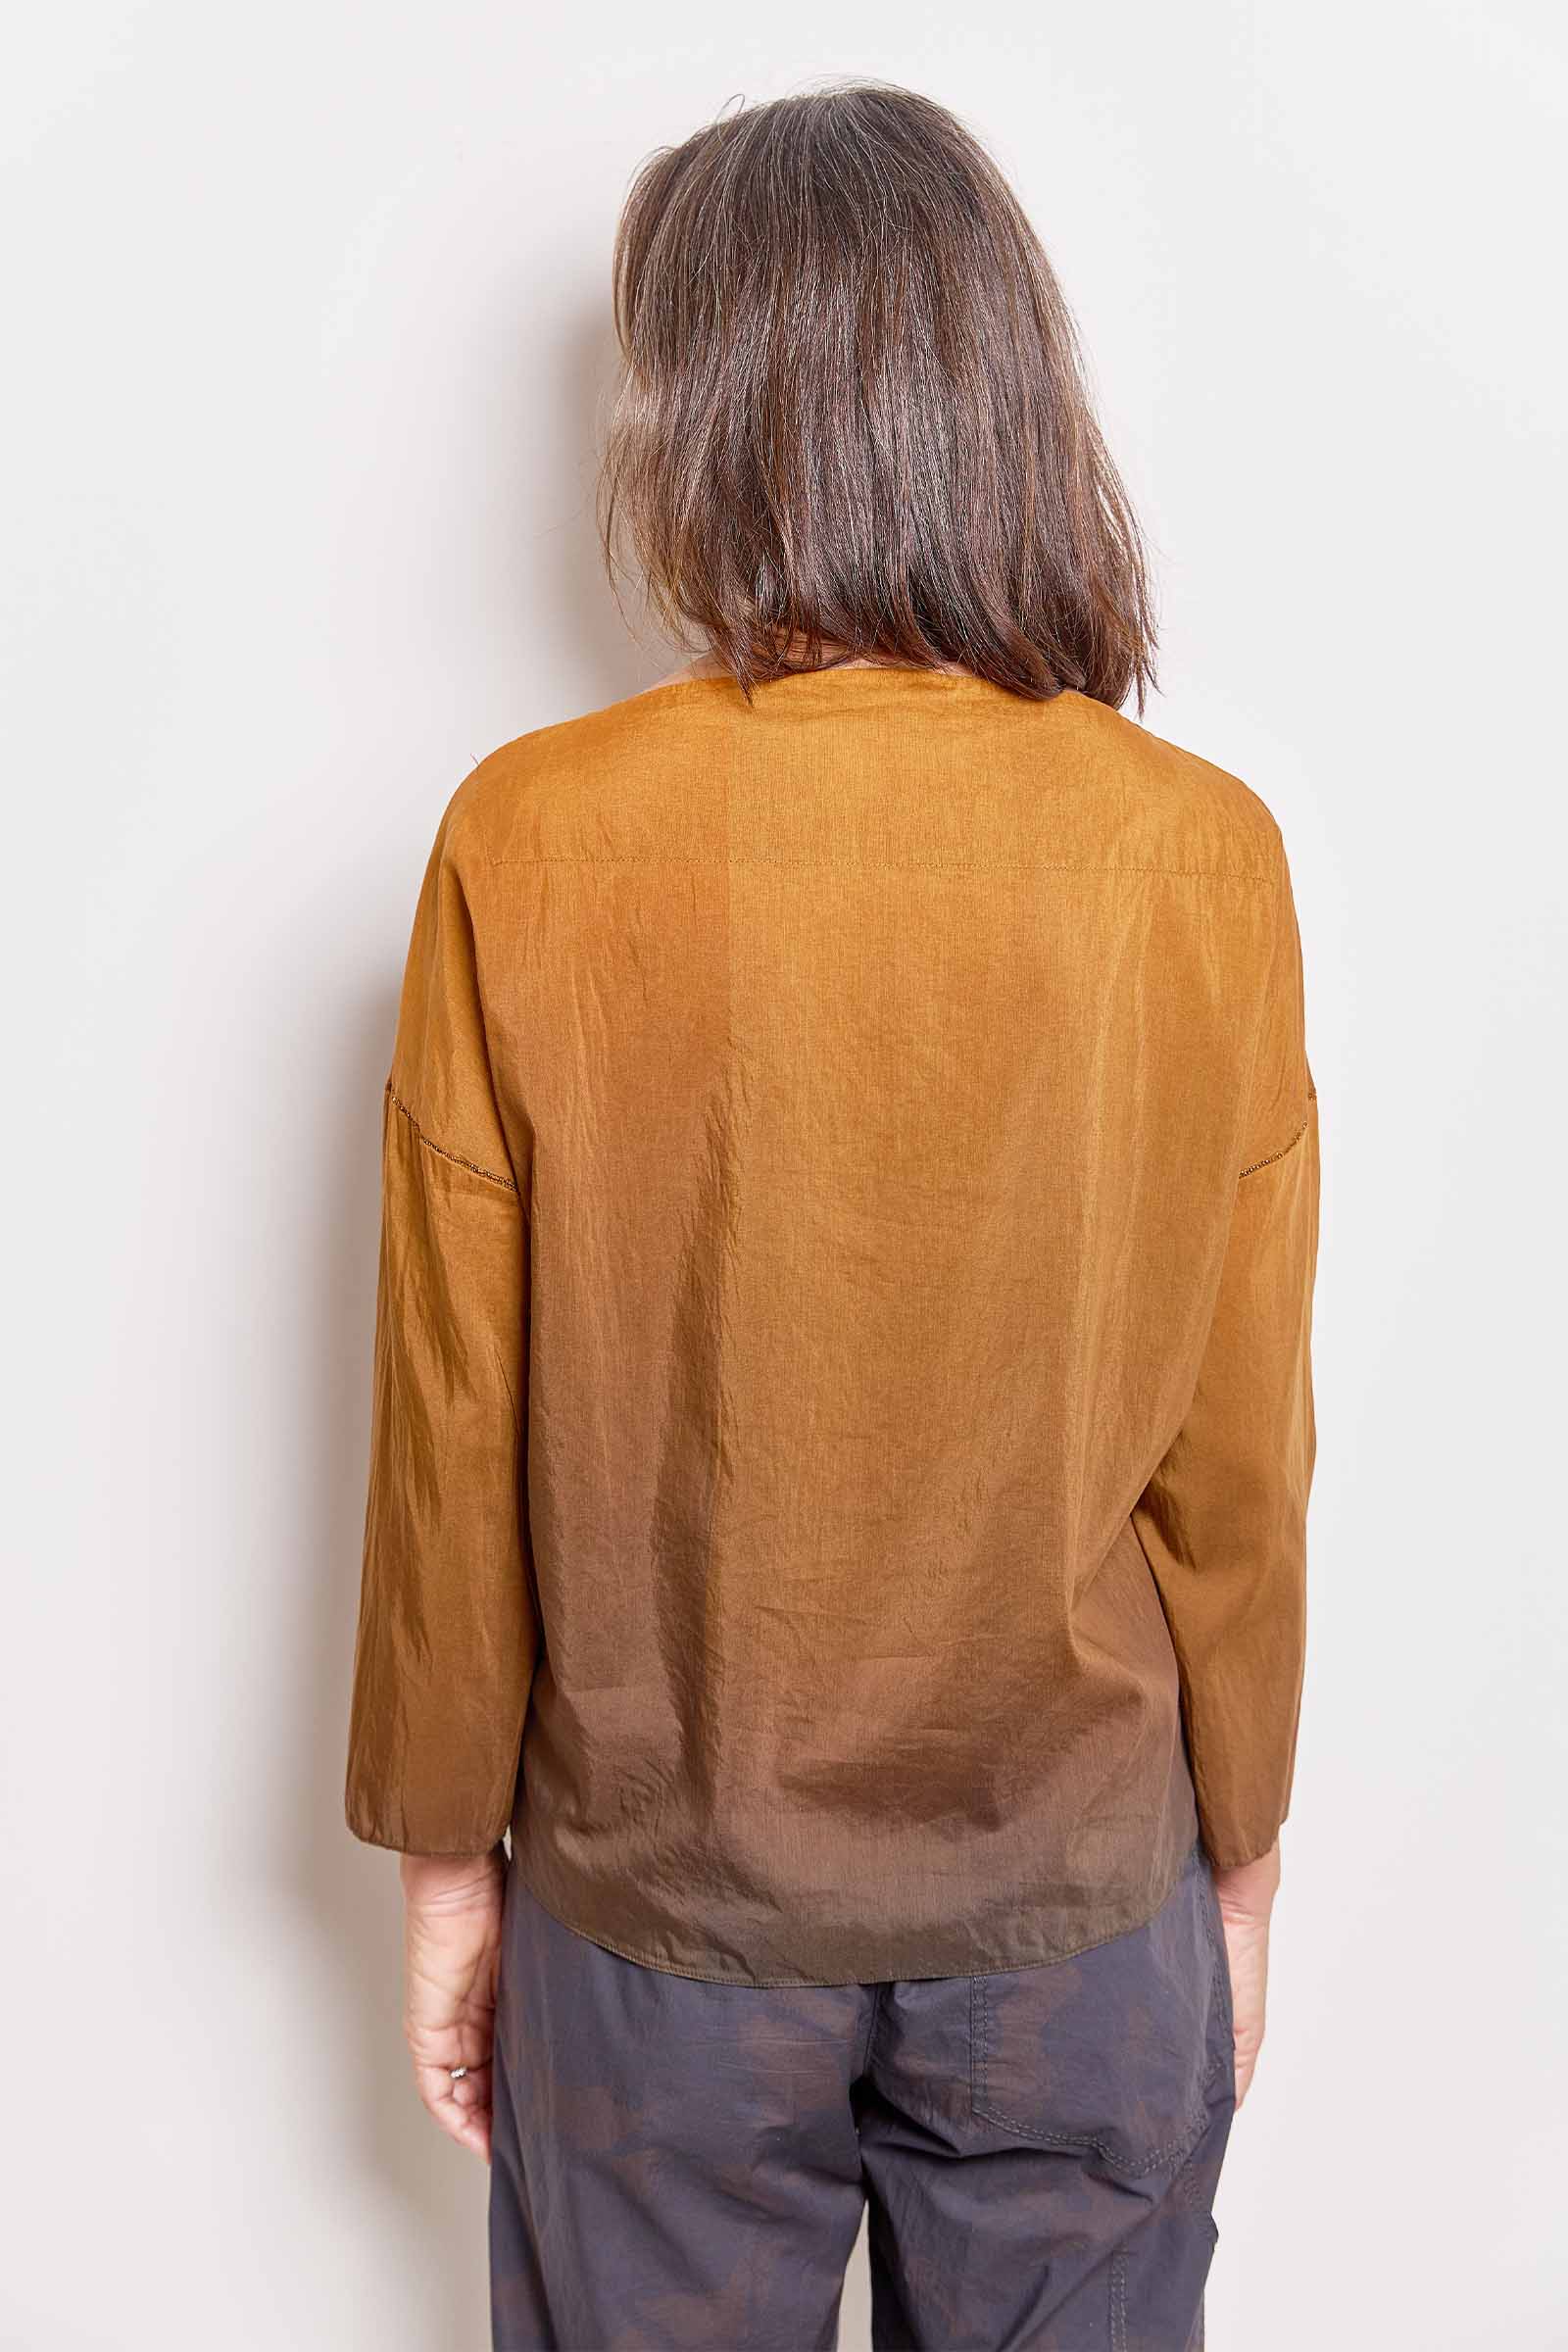 quincy dark ochre cotton silk top.